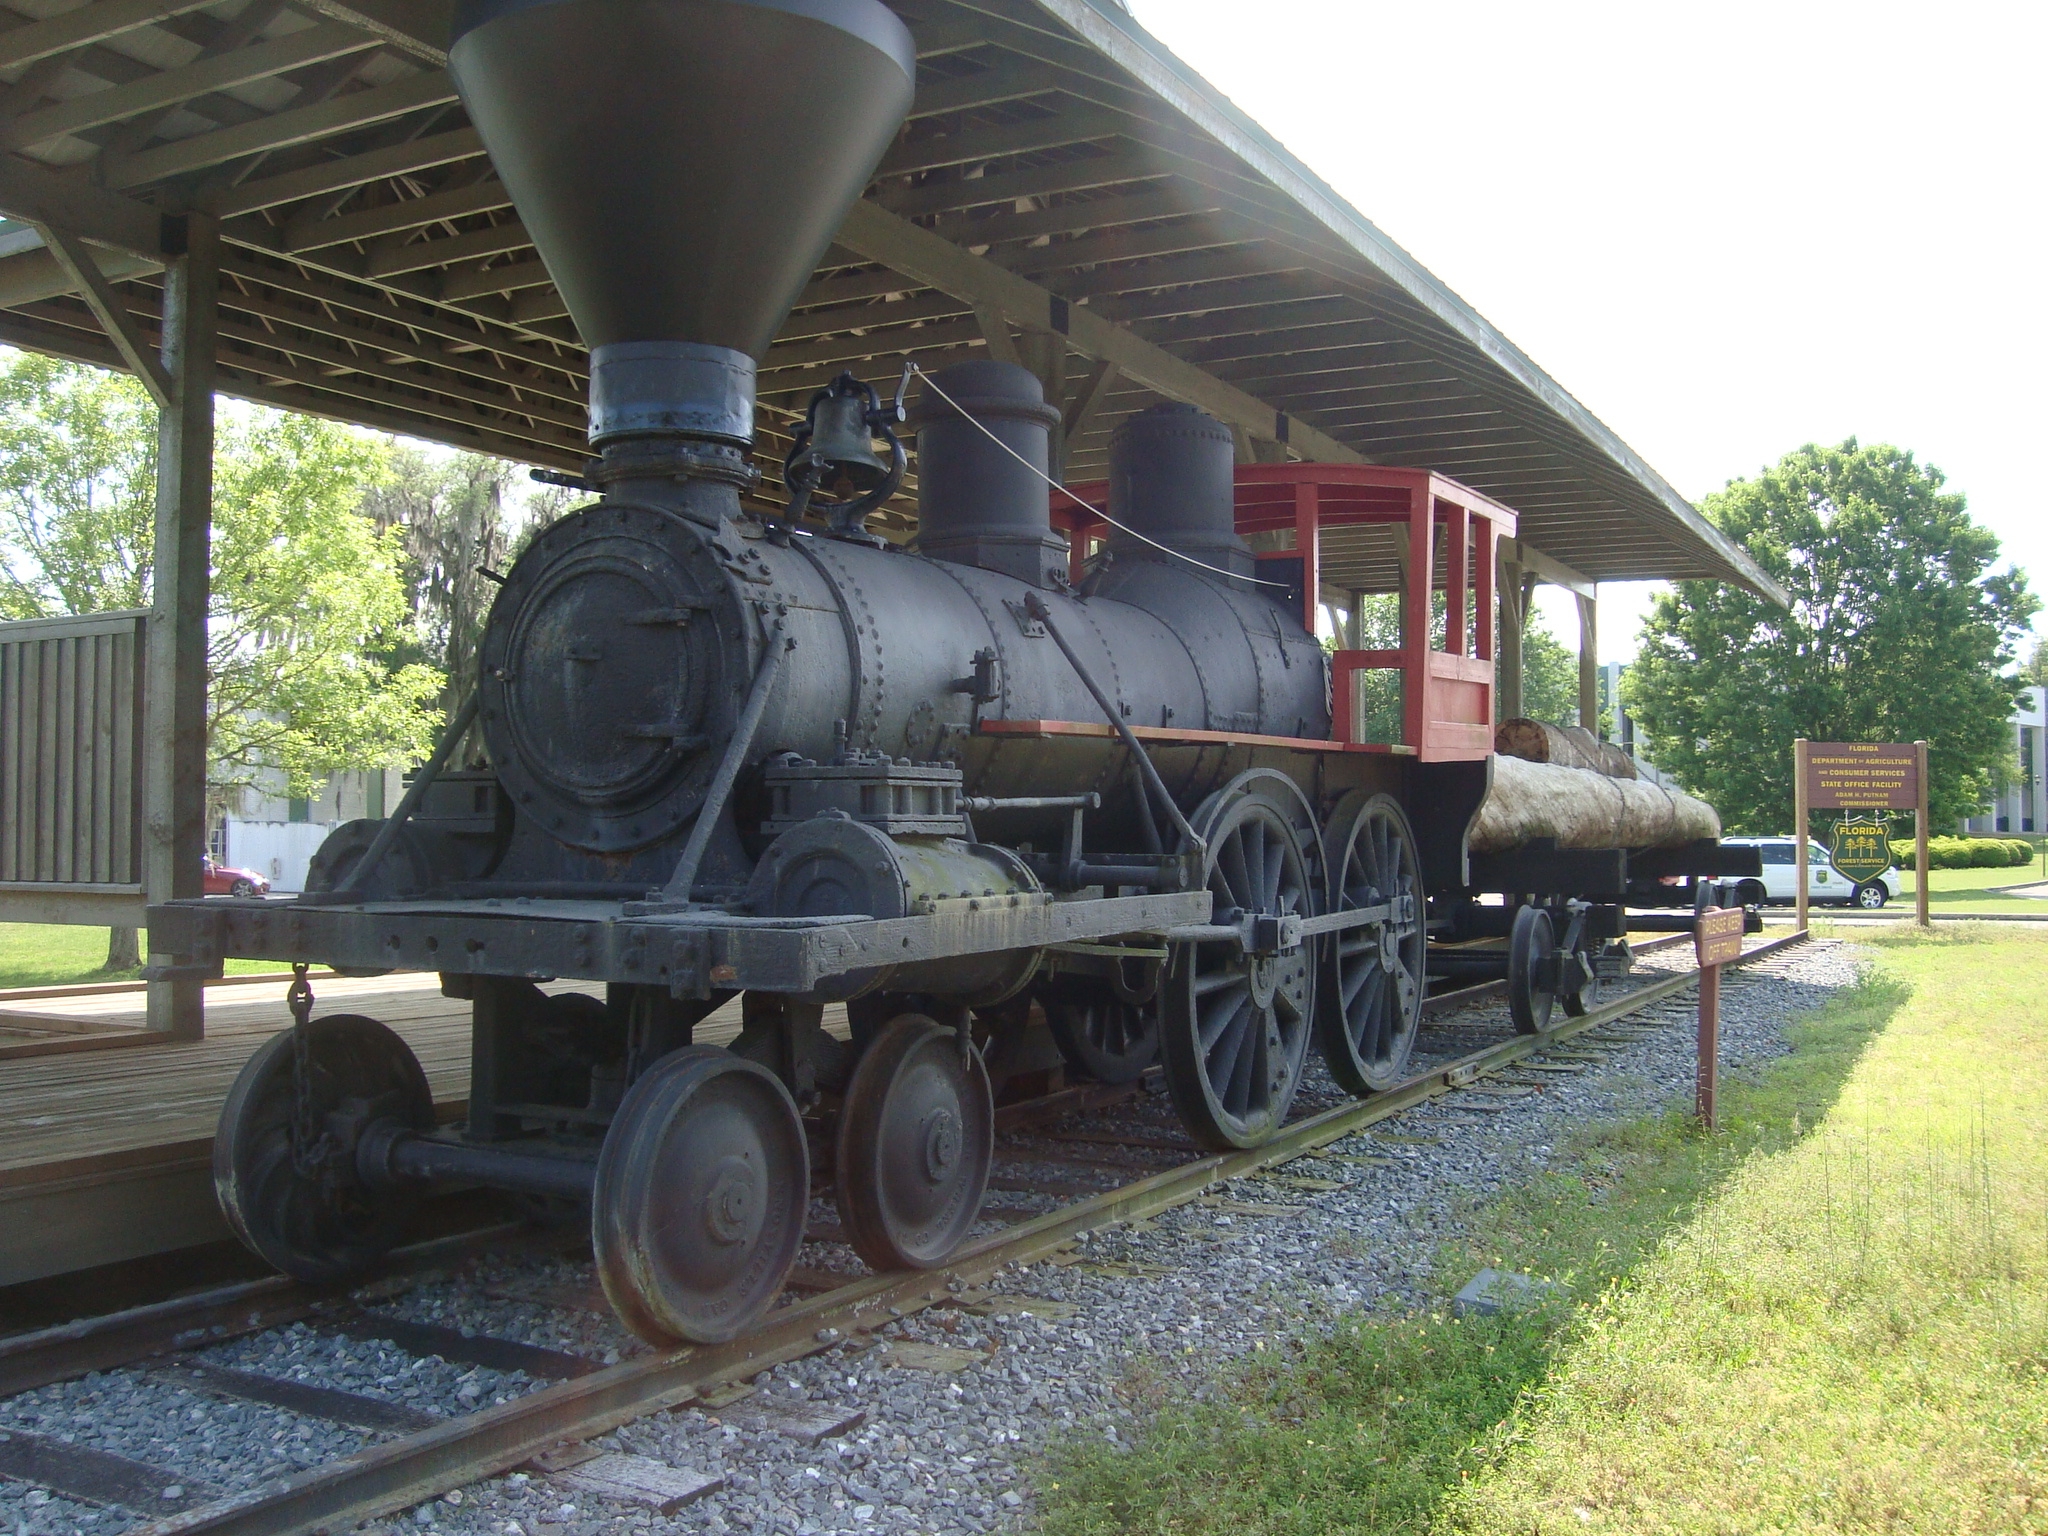 The "Luraville Locomotive"